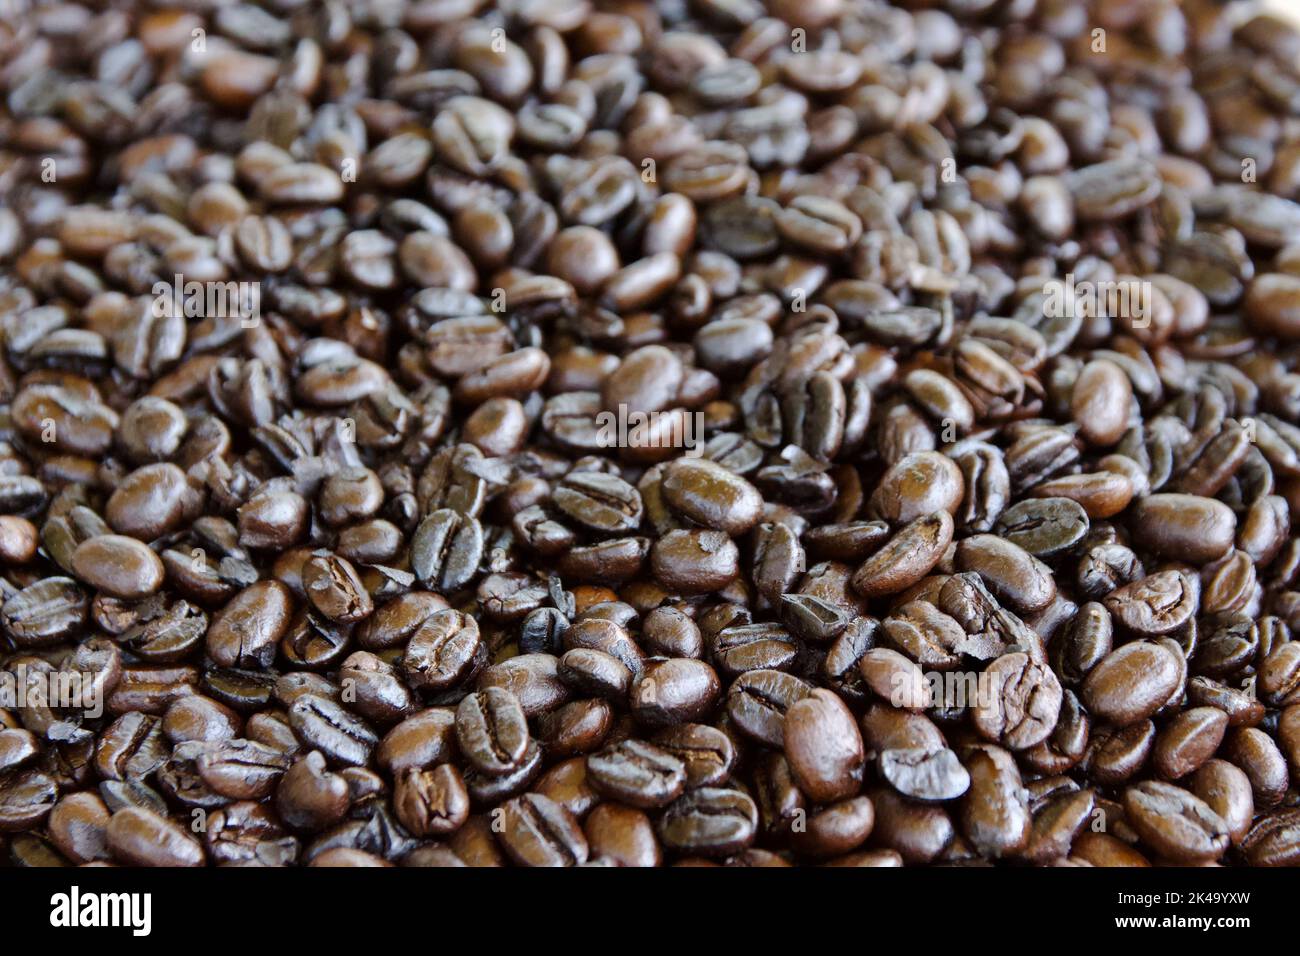 Closeup photo of roasted coffee beans from Uganda Stock Photo